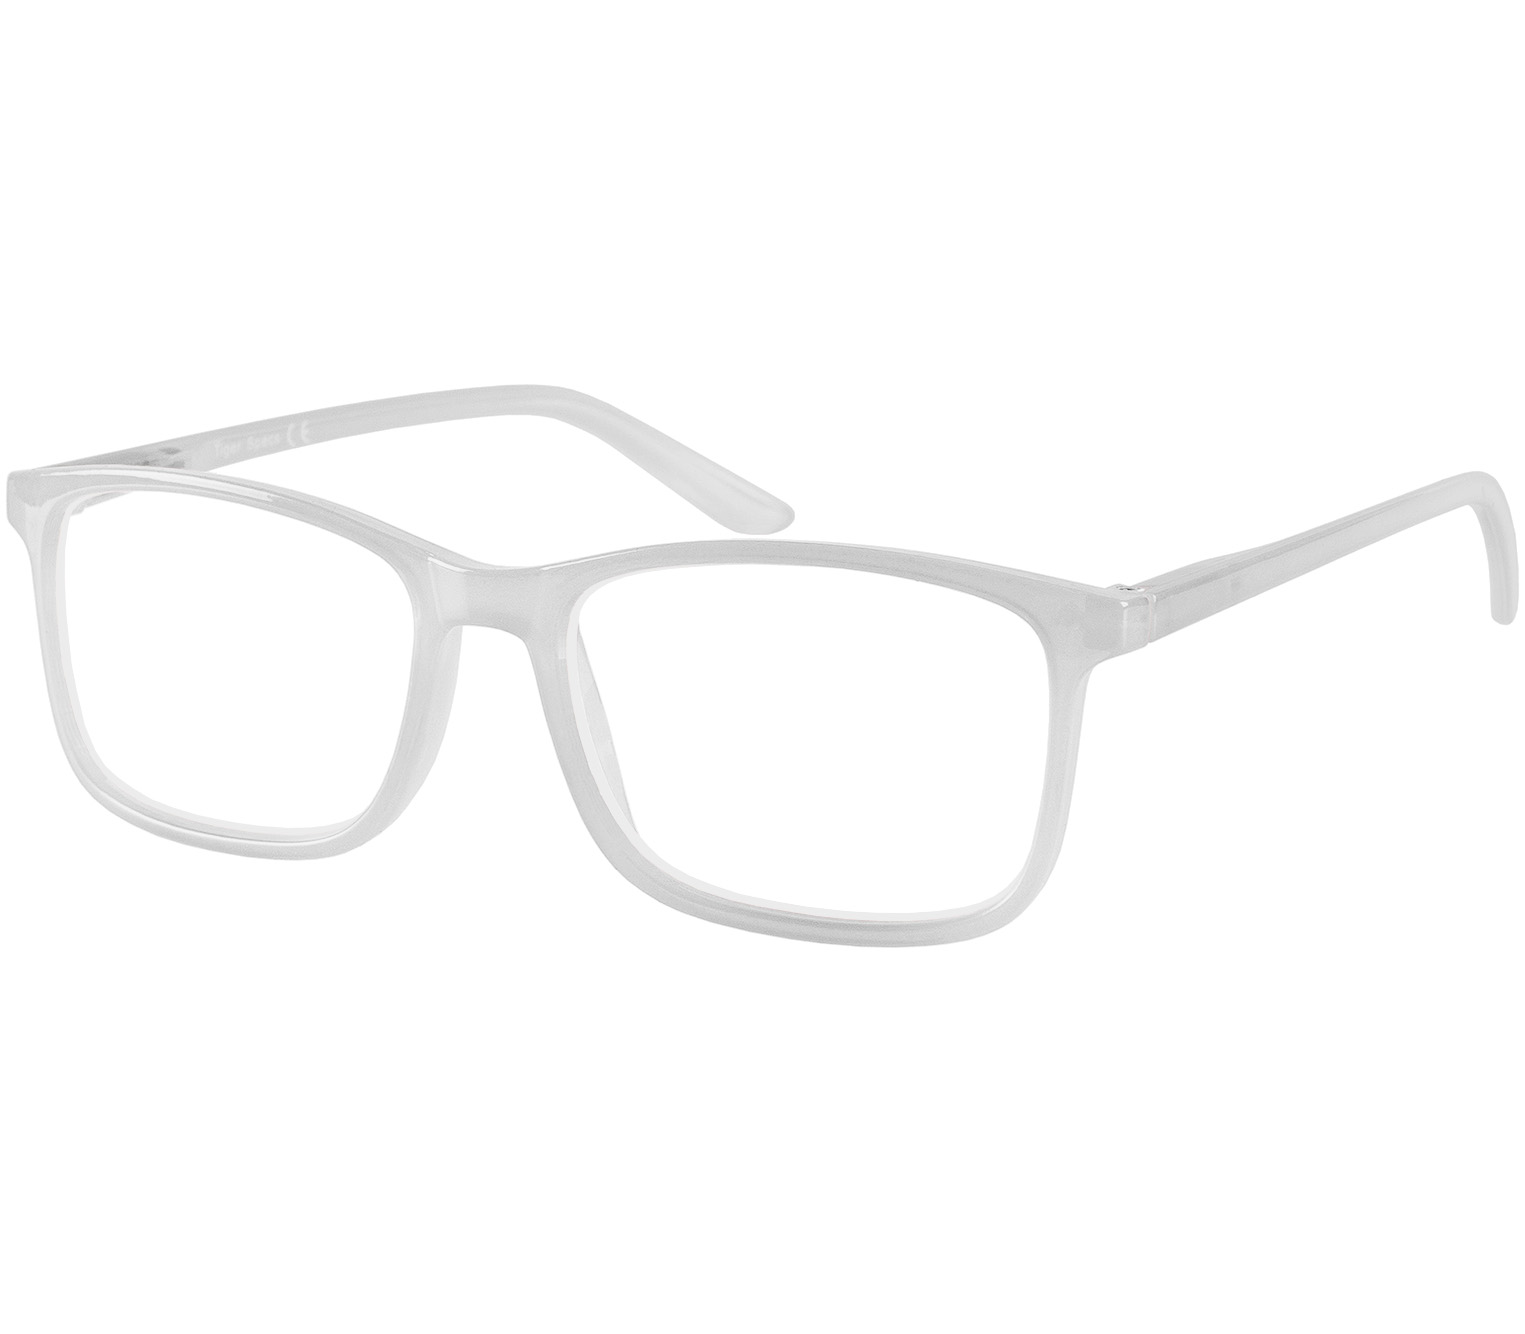 Main Image (Angle) - Sundae (Clear) Reading Glasses